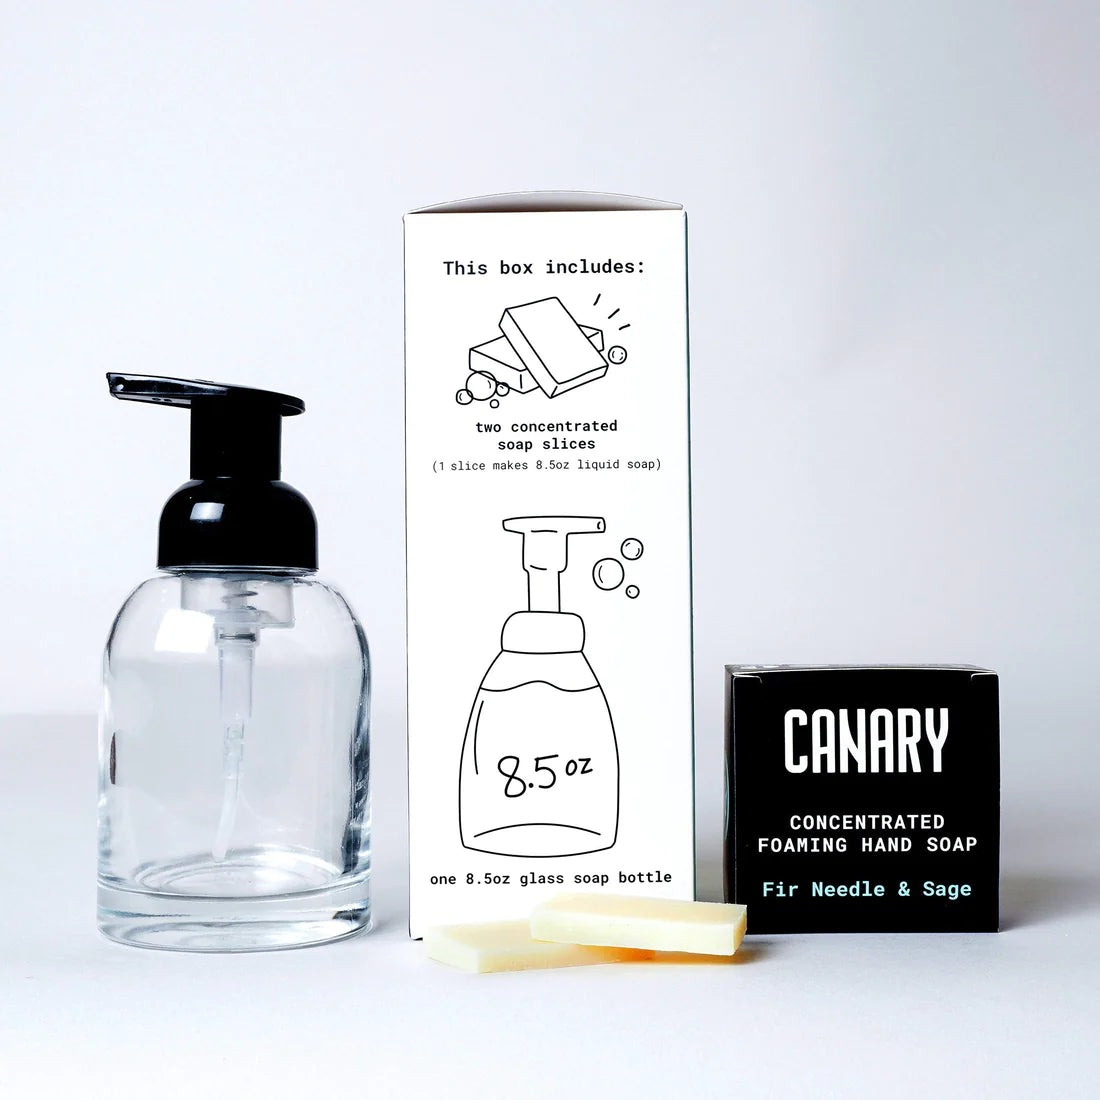 Canary Foaming Hand Soap